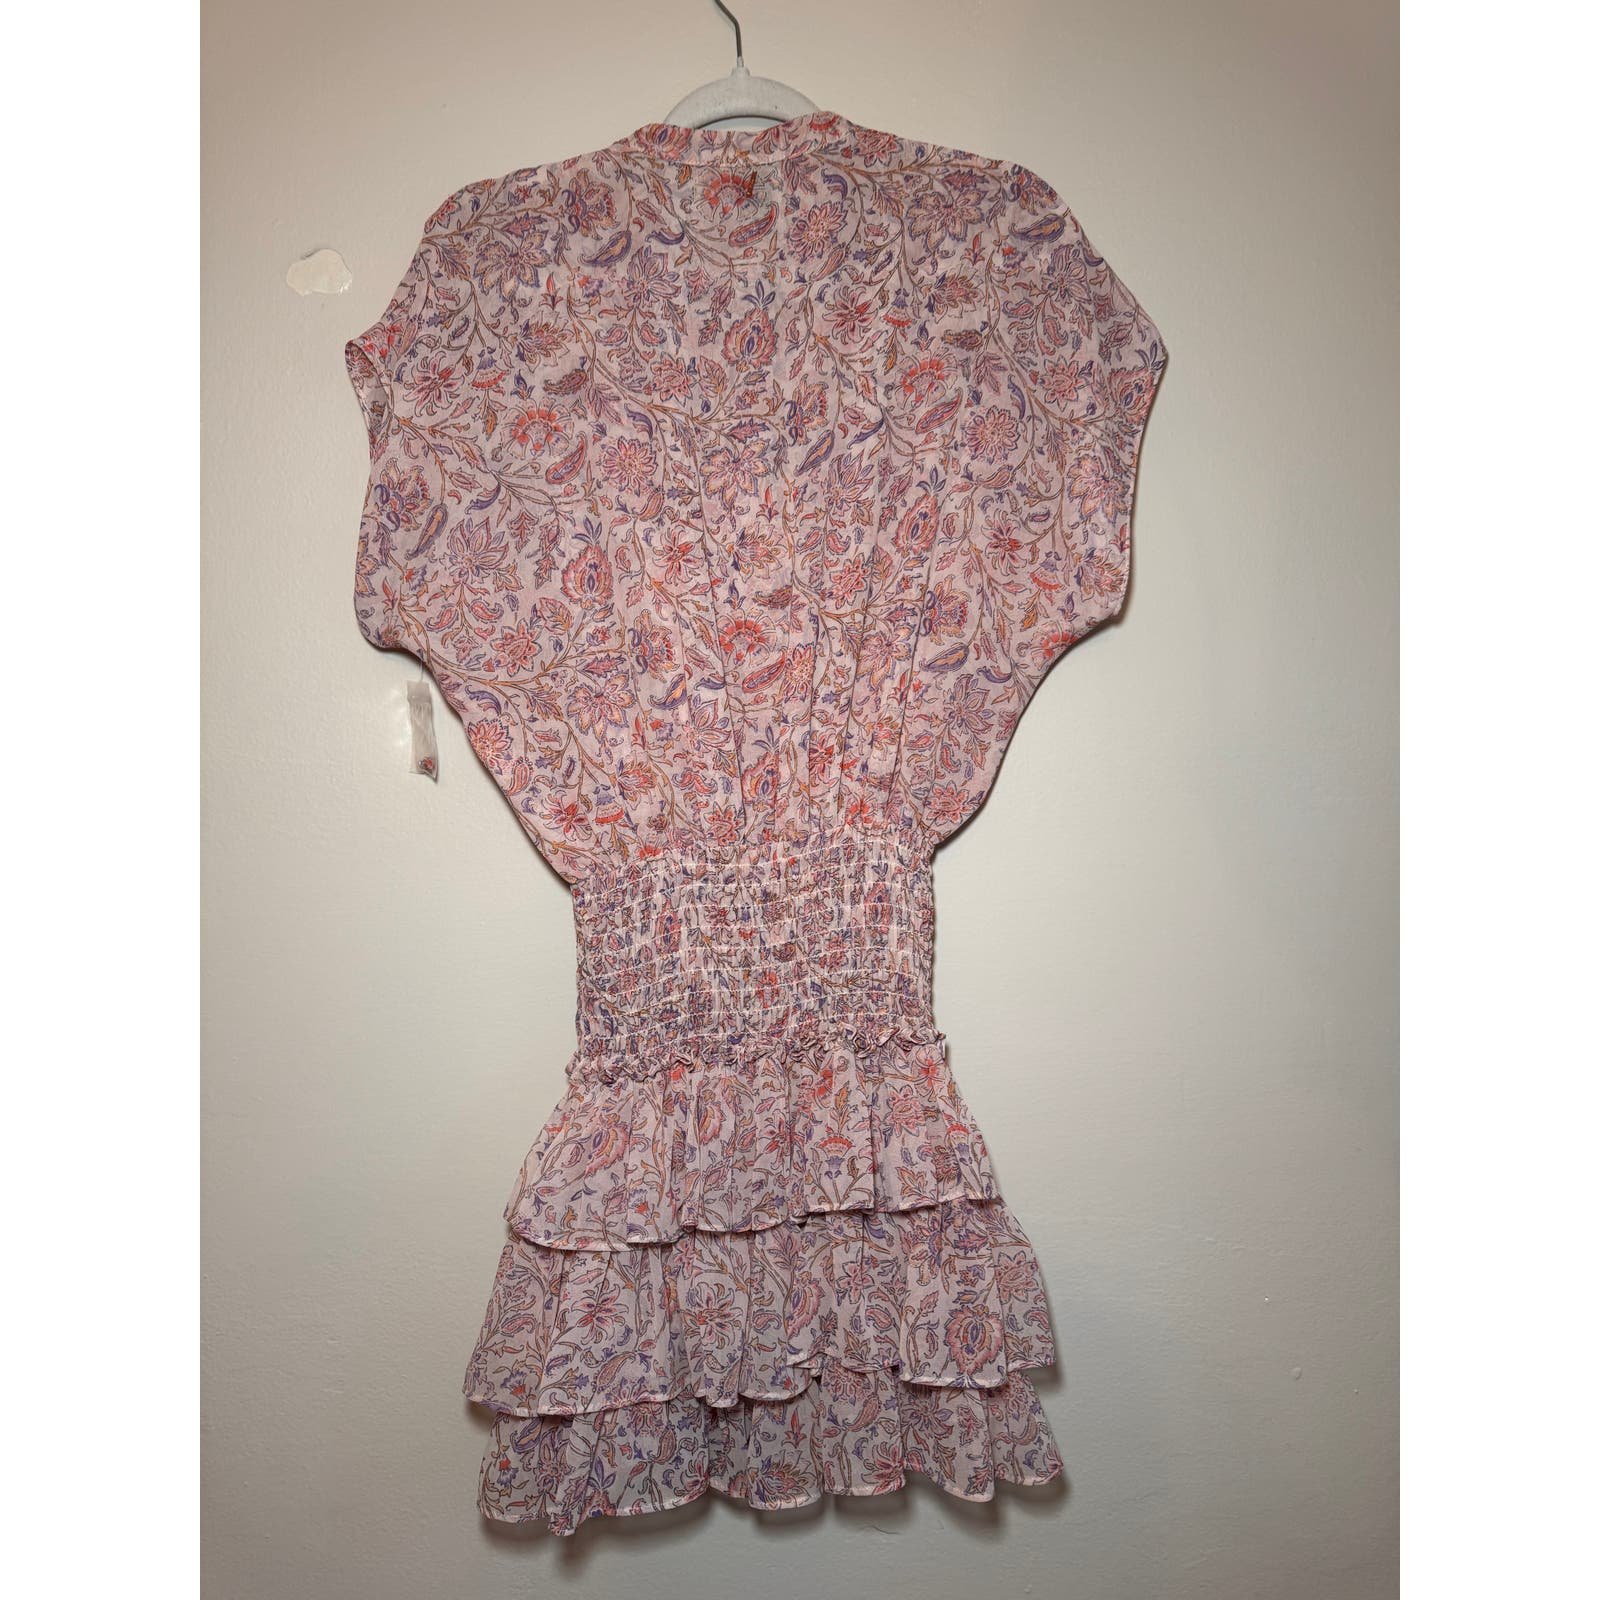 MISA Women´s Eloisa paisley rose  Dress size L 7VRC6Q3qj